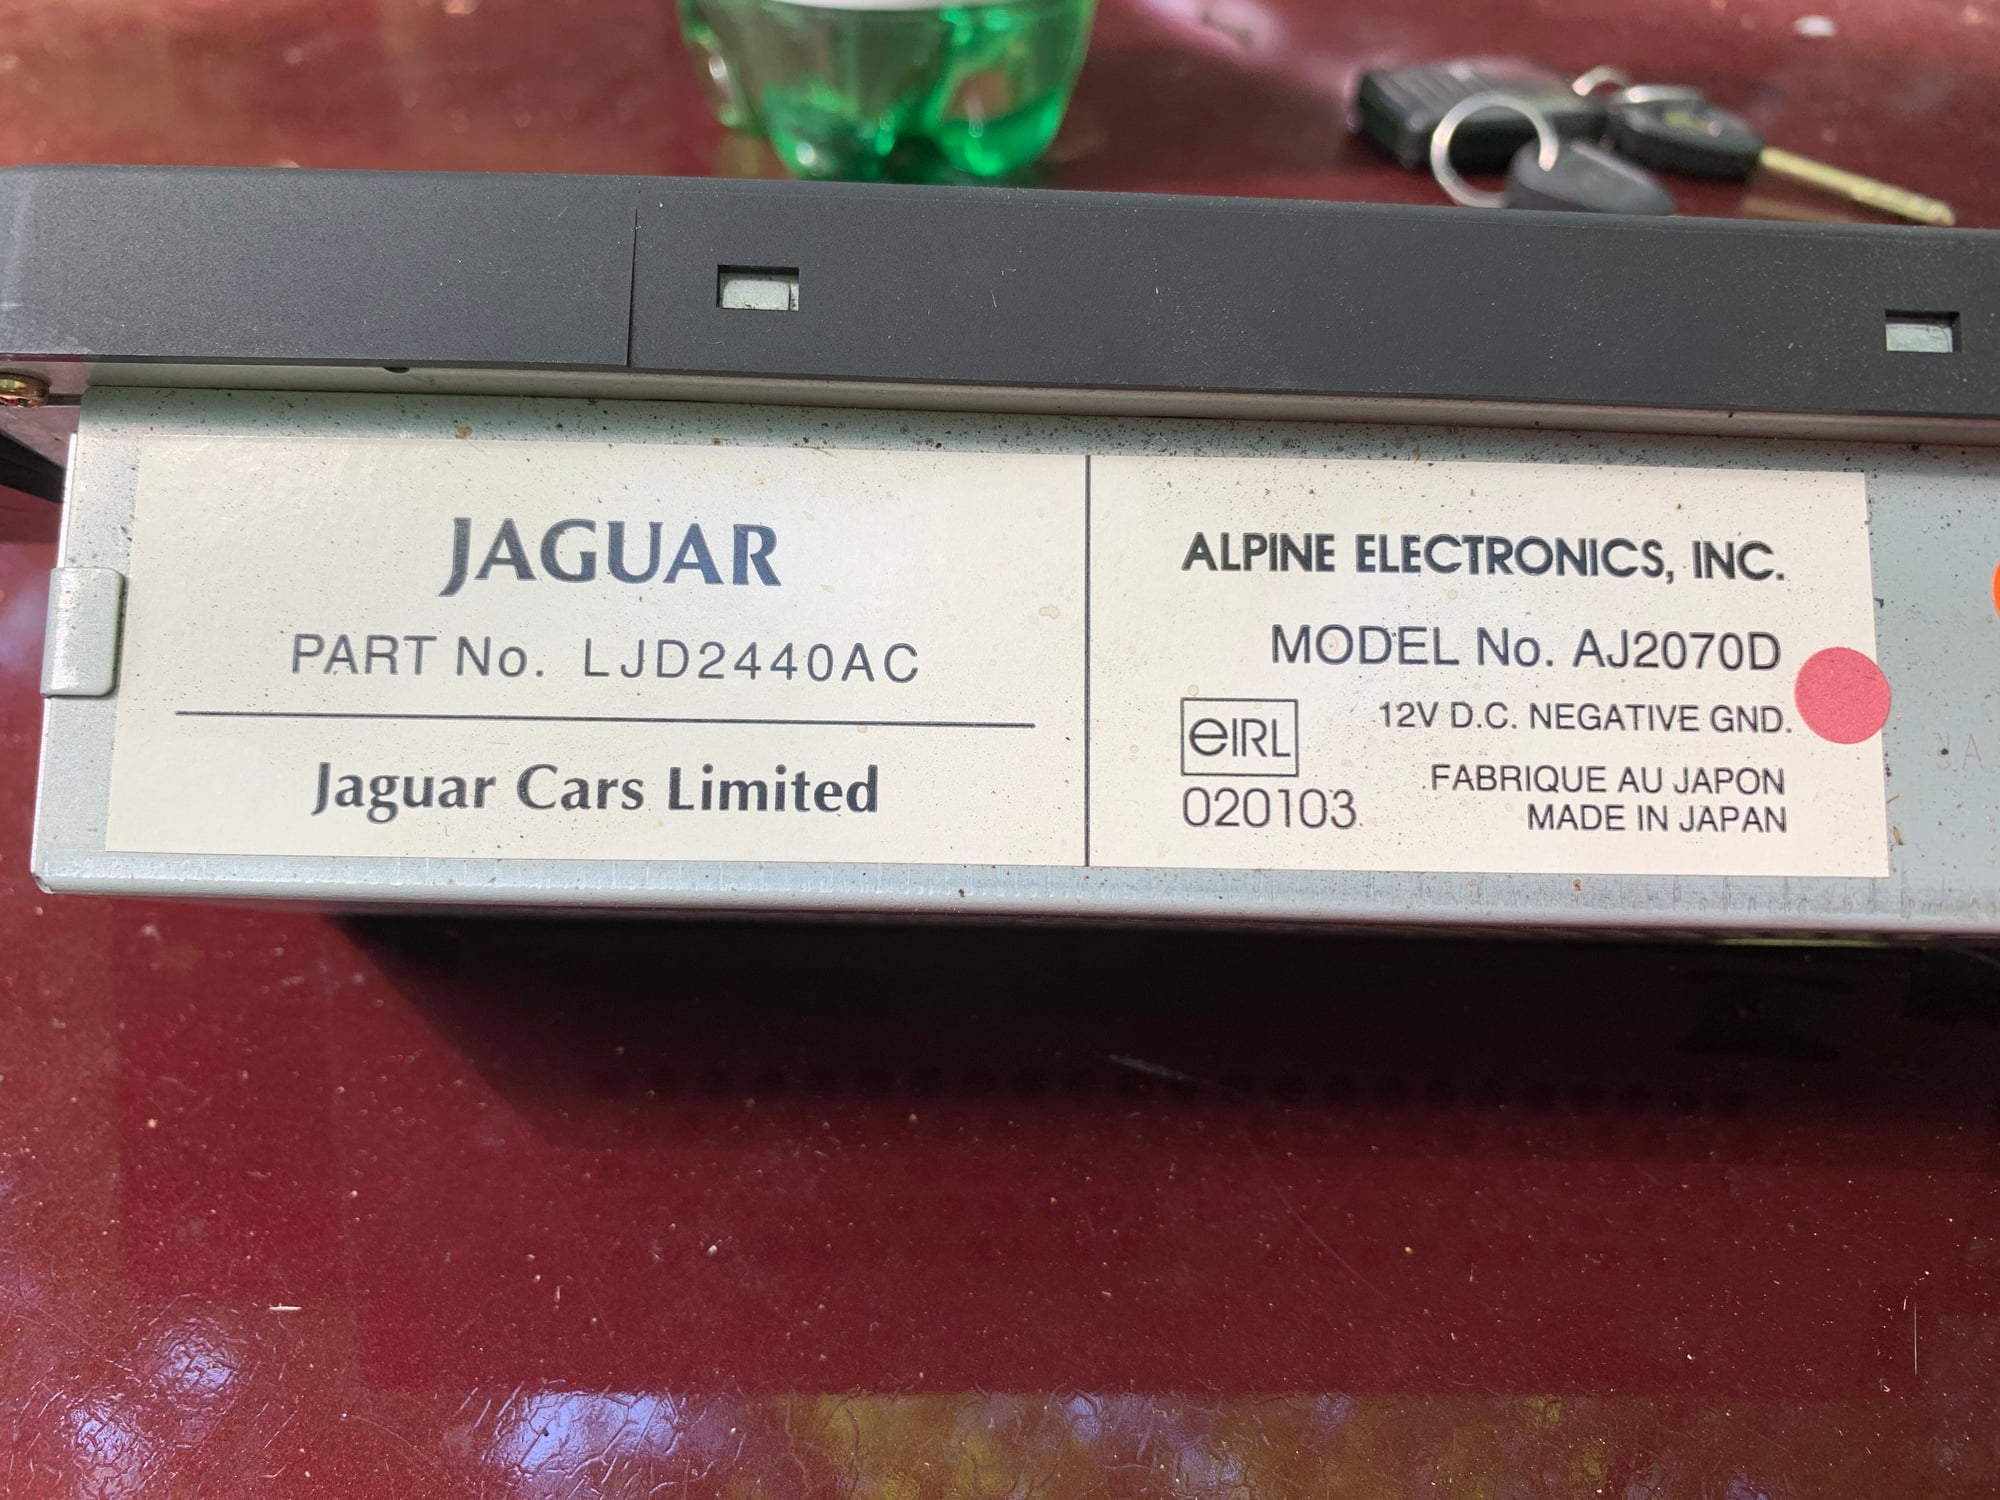 1997 Jaguar XK8 - 01 XK8 Navigation Screen and components - Audio Video/Electronics - $110 - Atlanta, GA 30339, United States